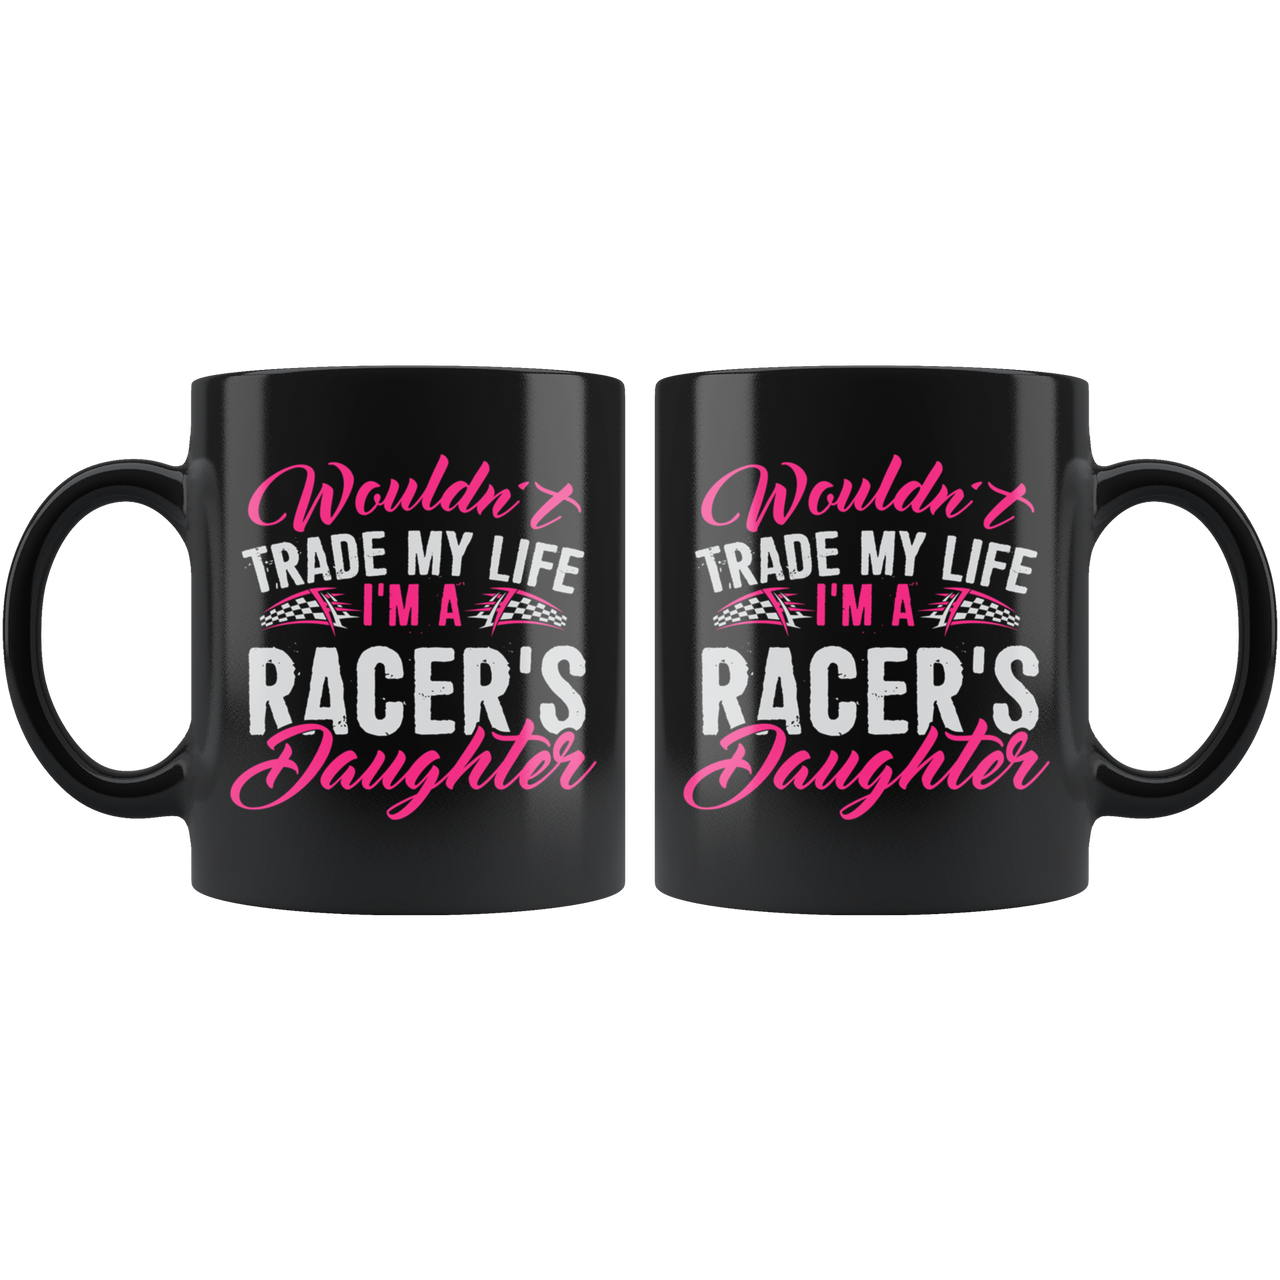 Wouldn't Trade My Life I'm A Racer's Daughter Mug!